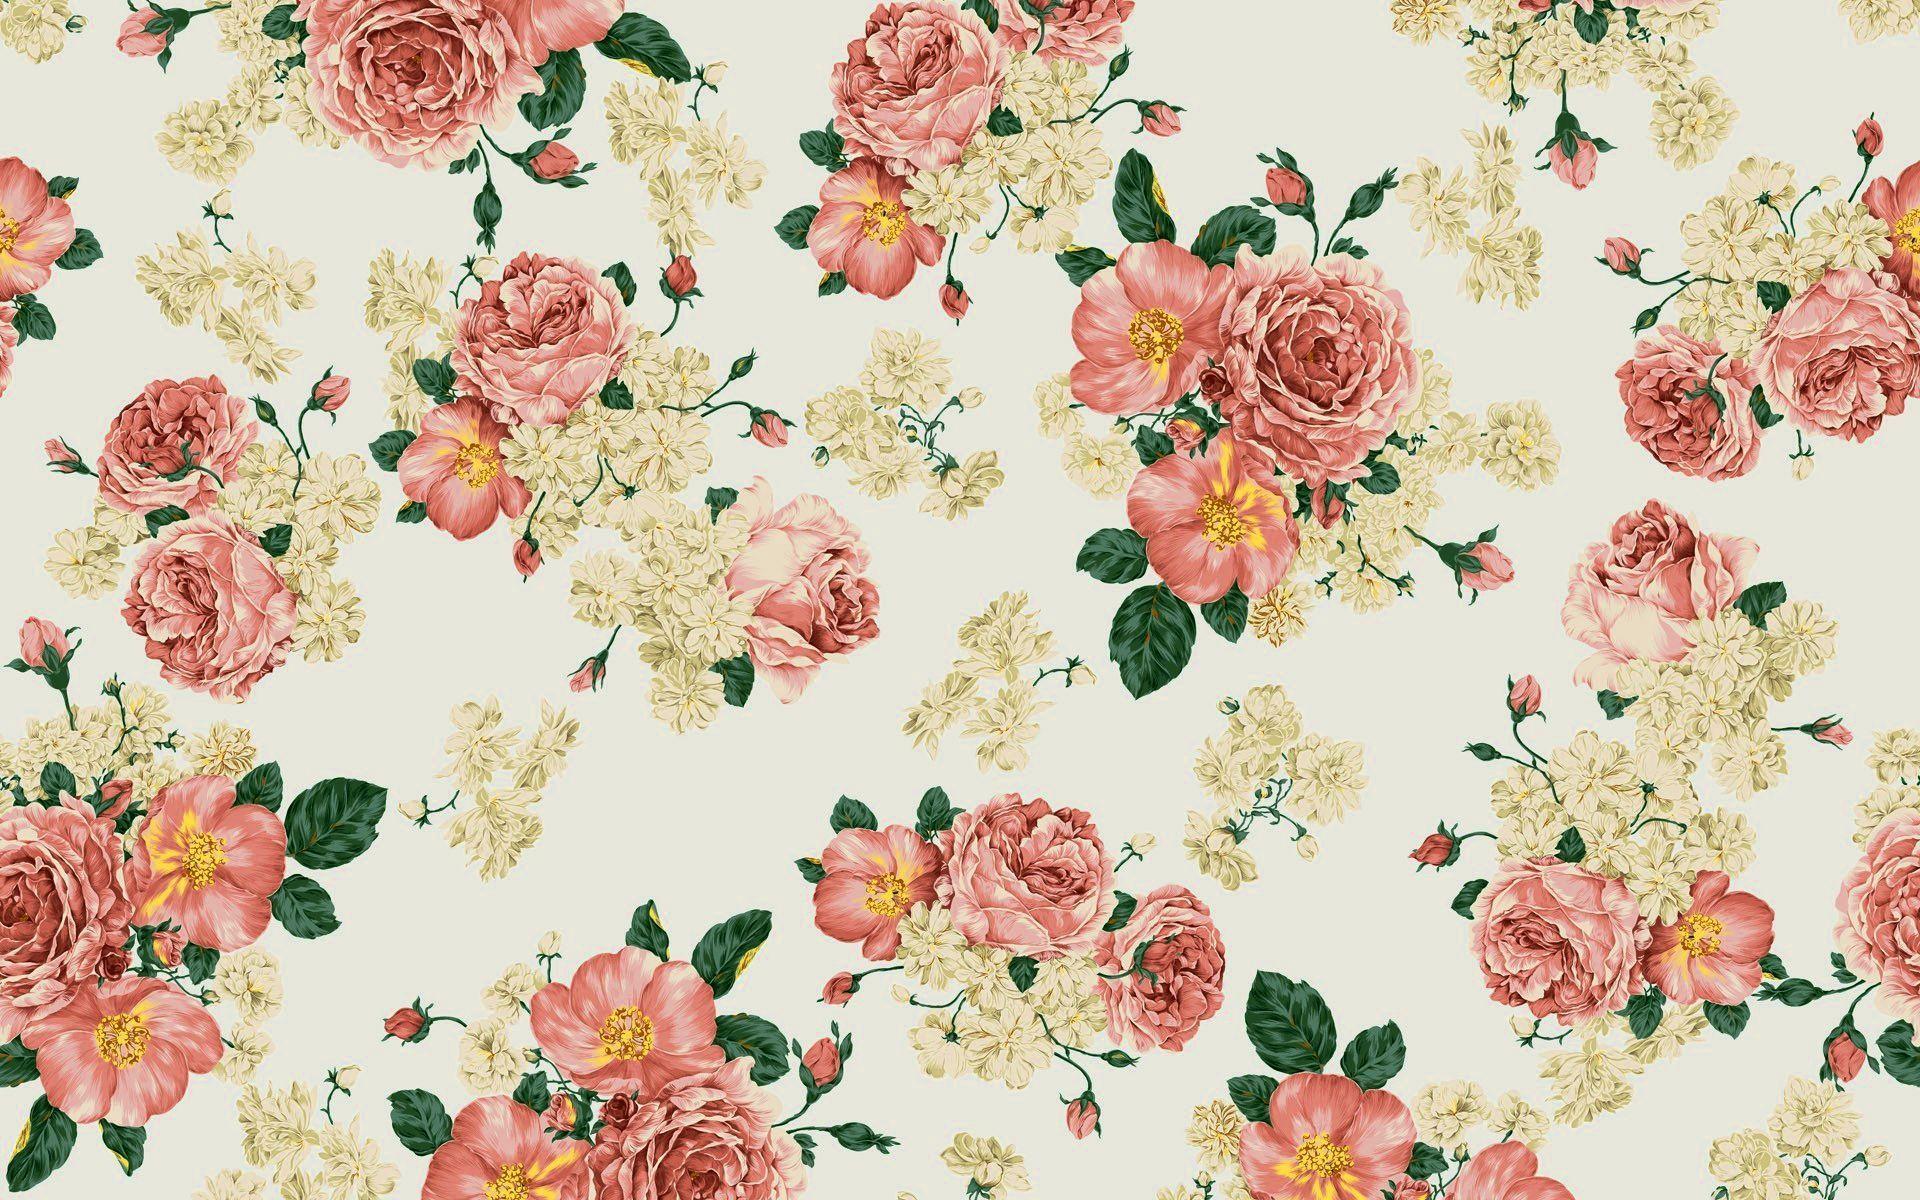 Floral Vintage Wallpaper Tumblr. Vintage flowers wallpaper